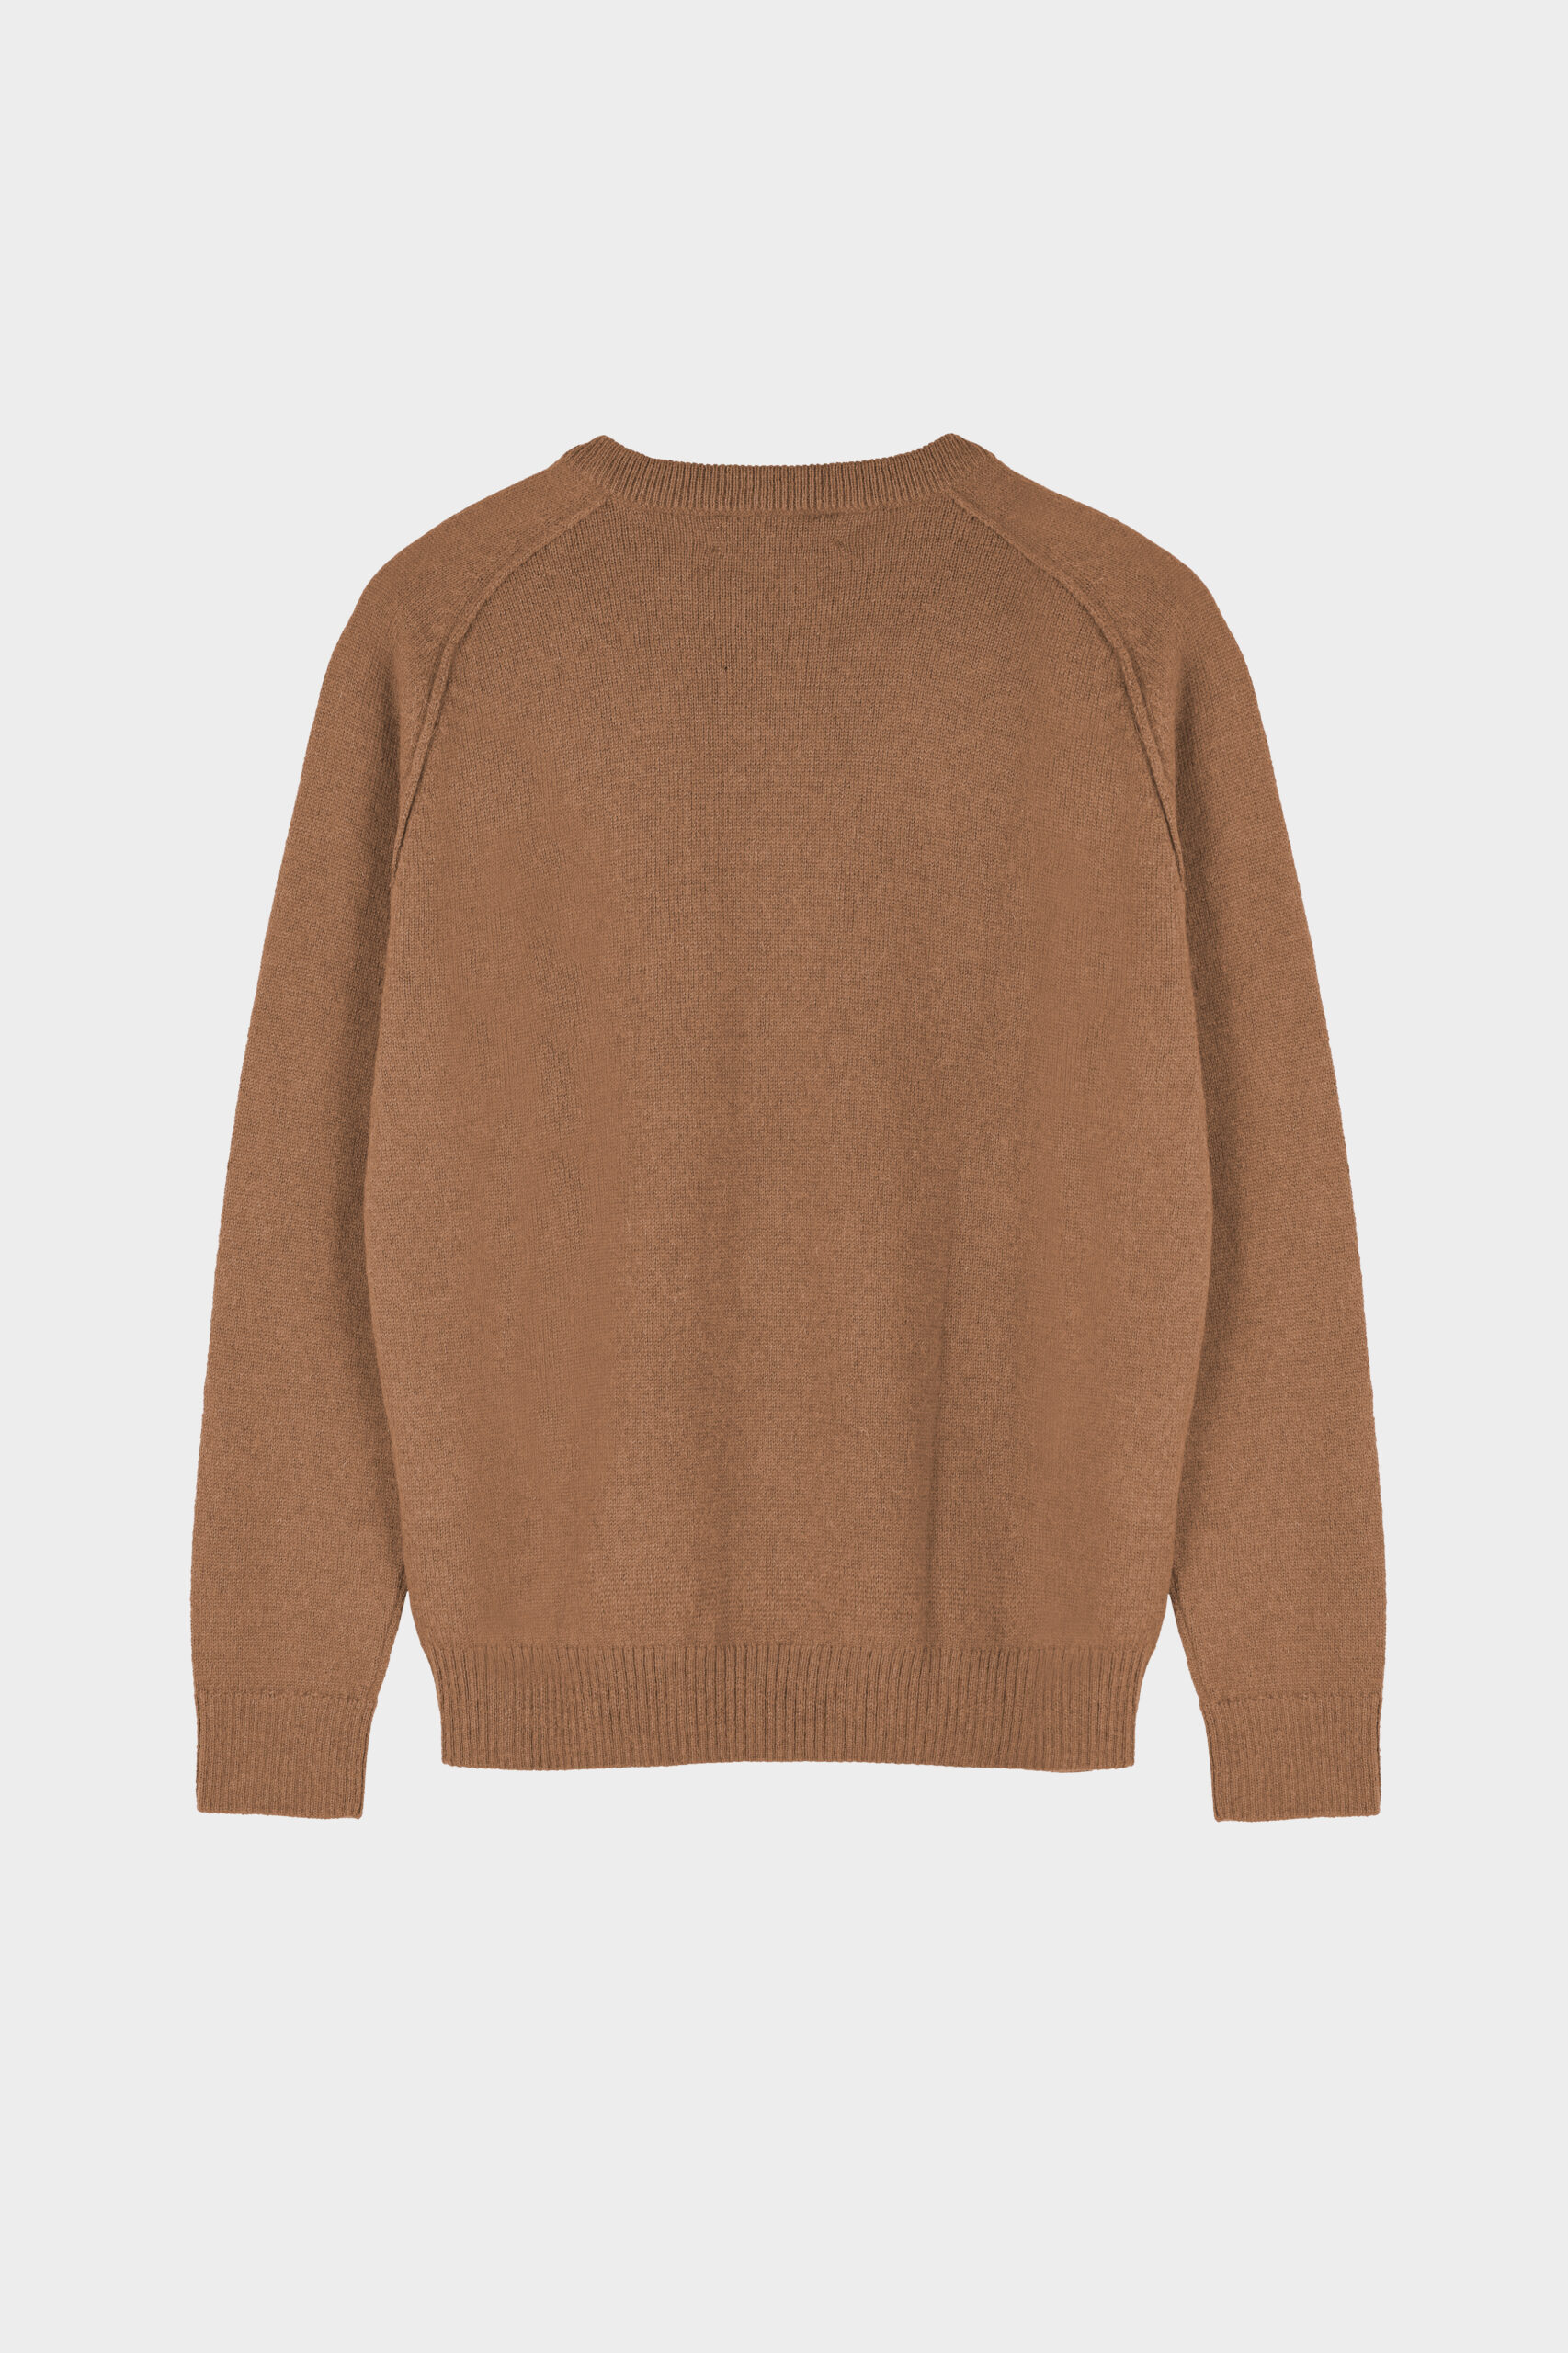 sweater ceibo camel 2_1000x1500_72